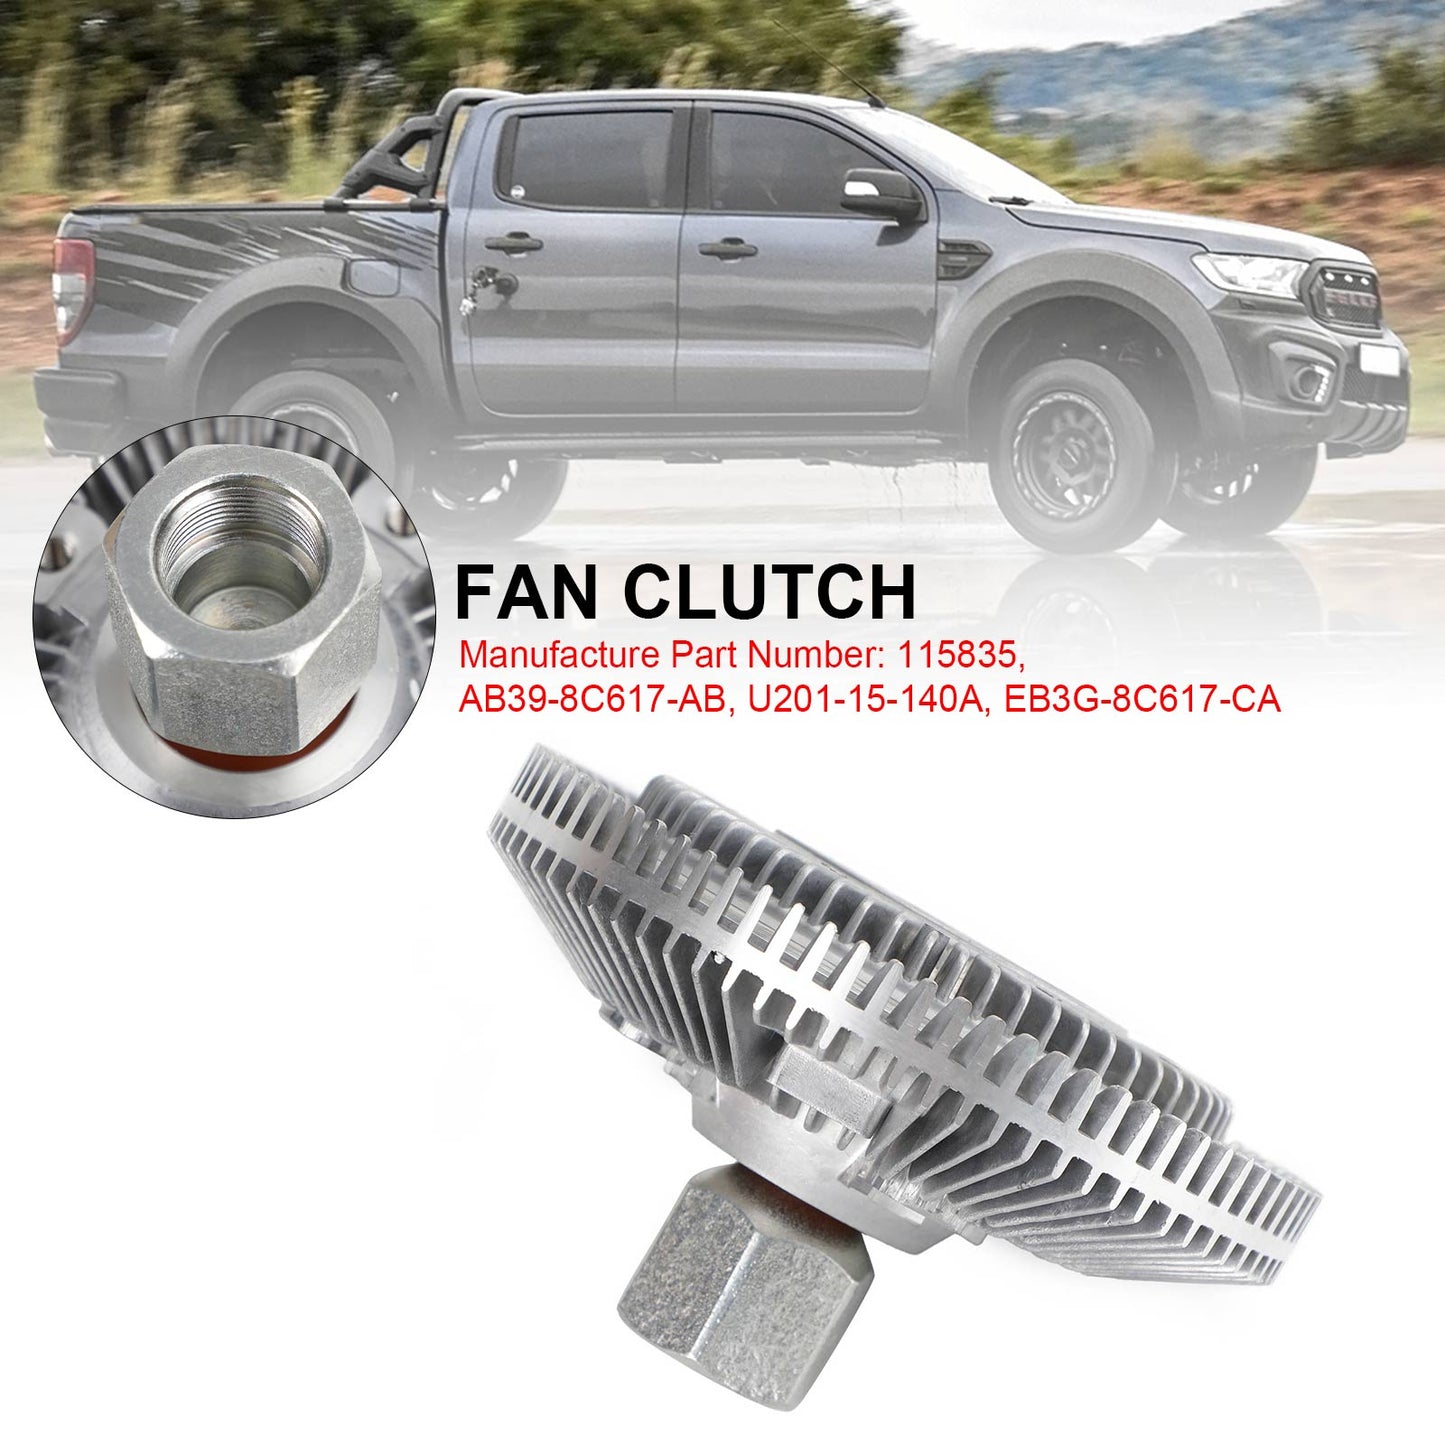 Fan Clutch 115835 fit Ford Ranger fit Mazda BT50 2.2L 3.2L Turbo Diesel Replace